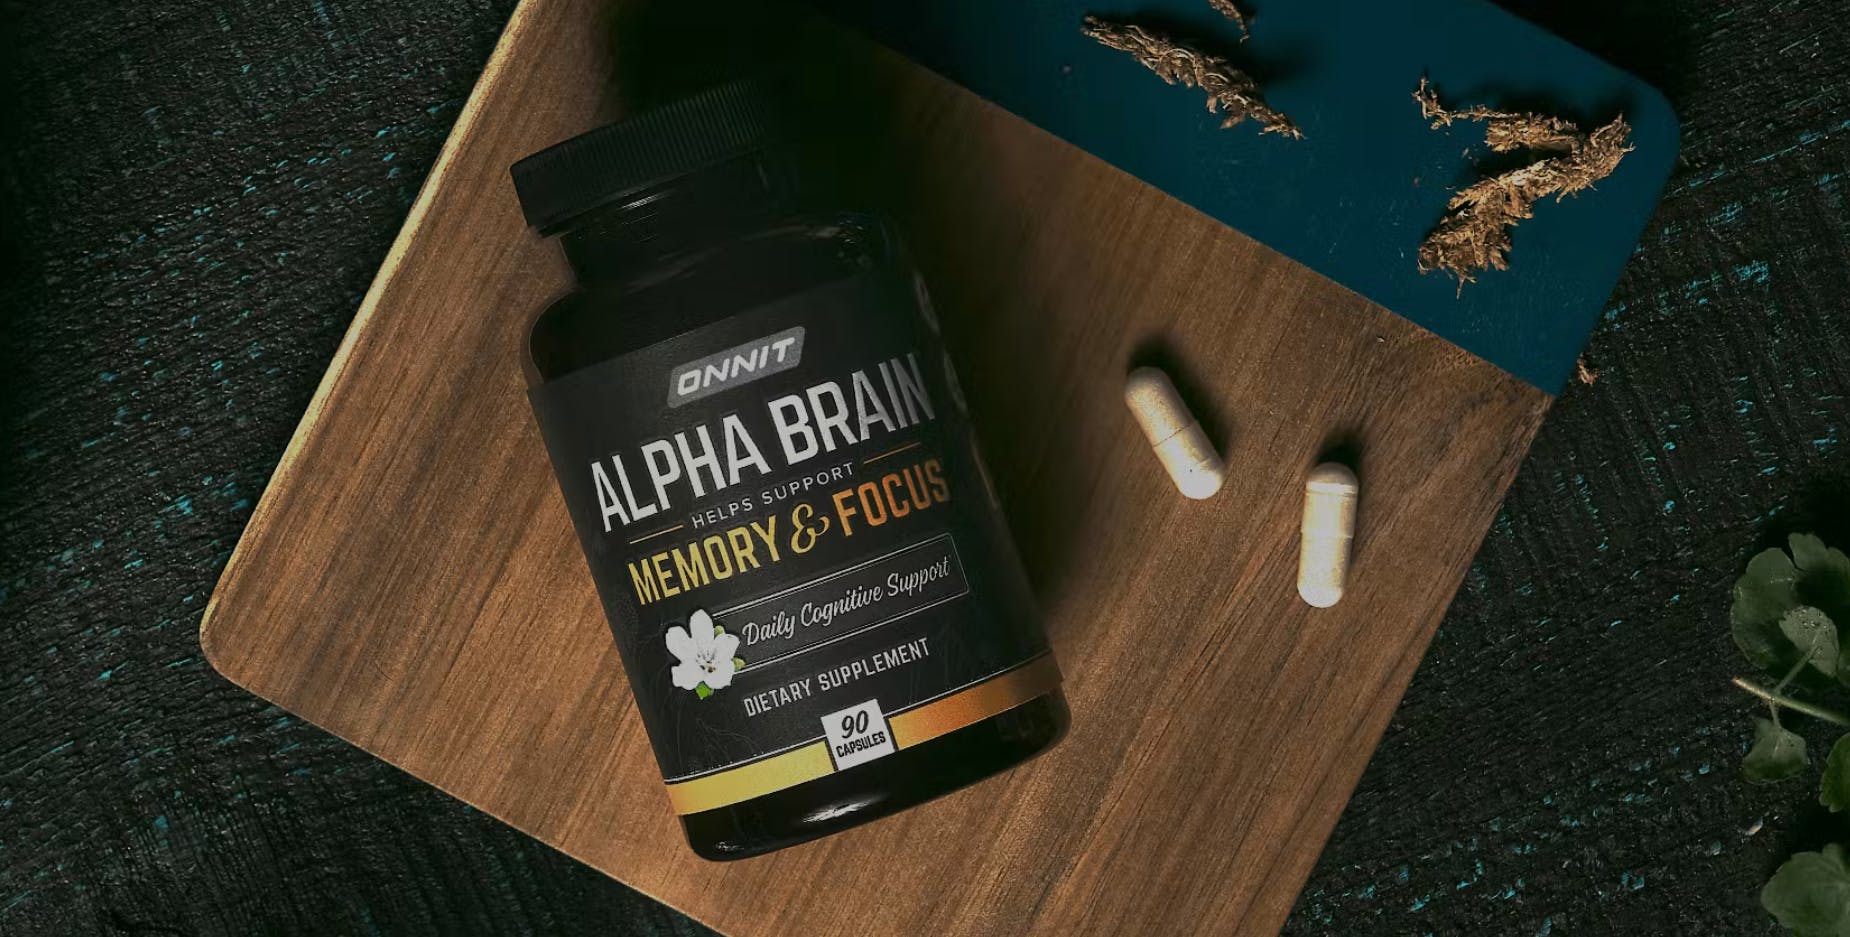 Alpha Brain Instant 30 pk – Body Goods Nutrition